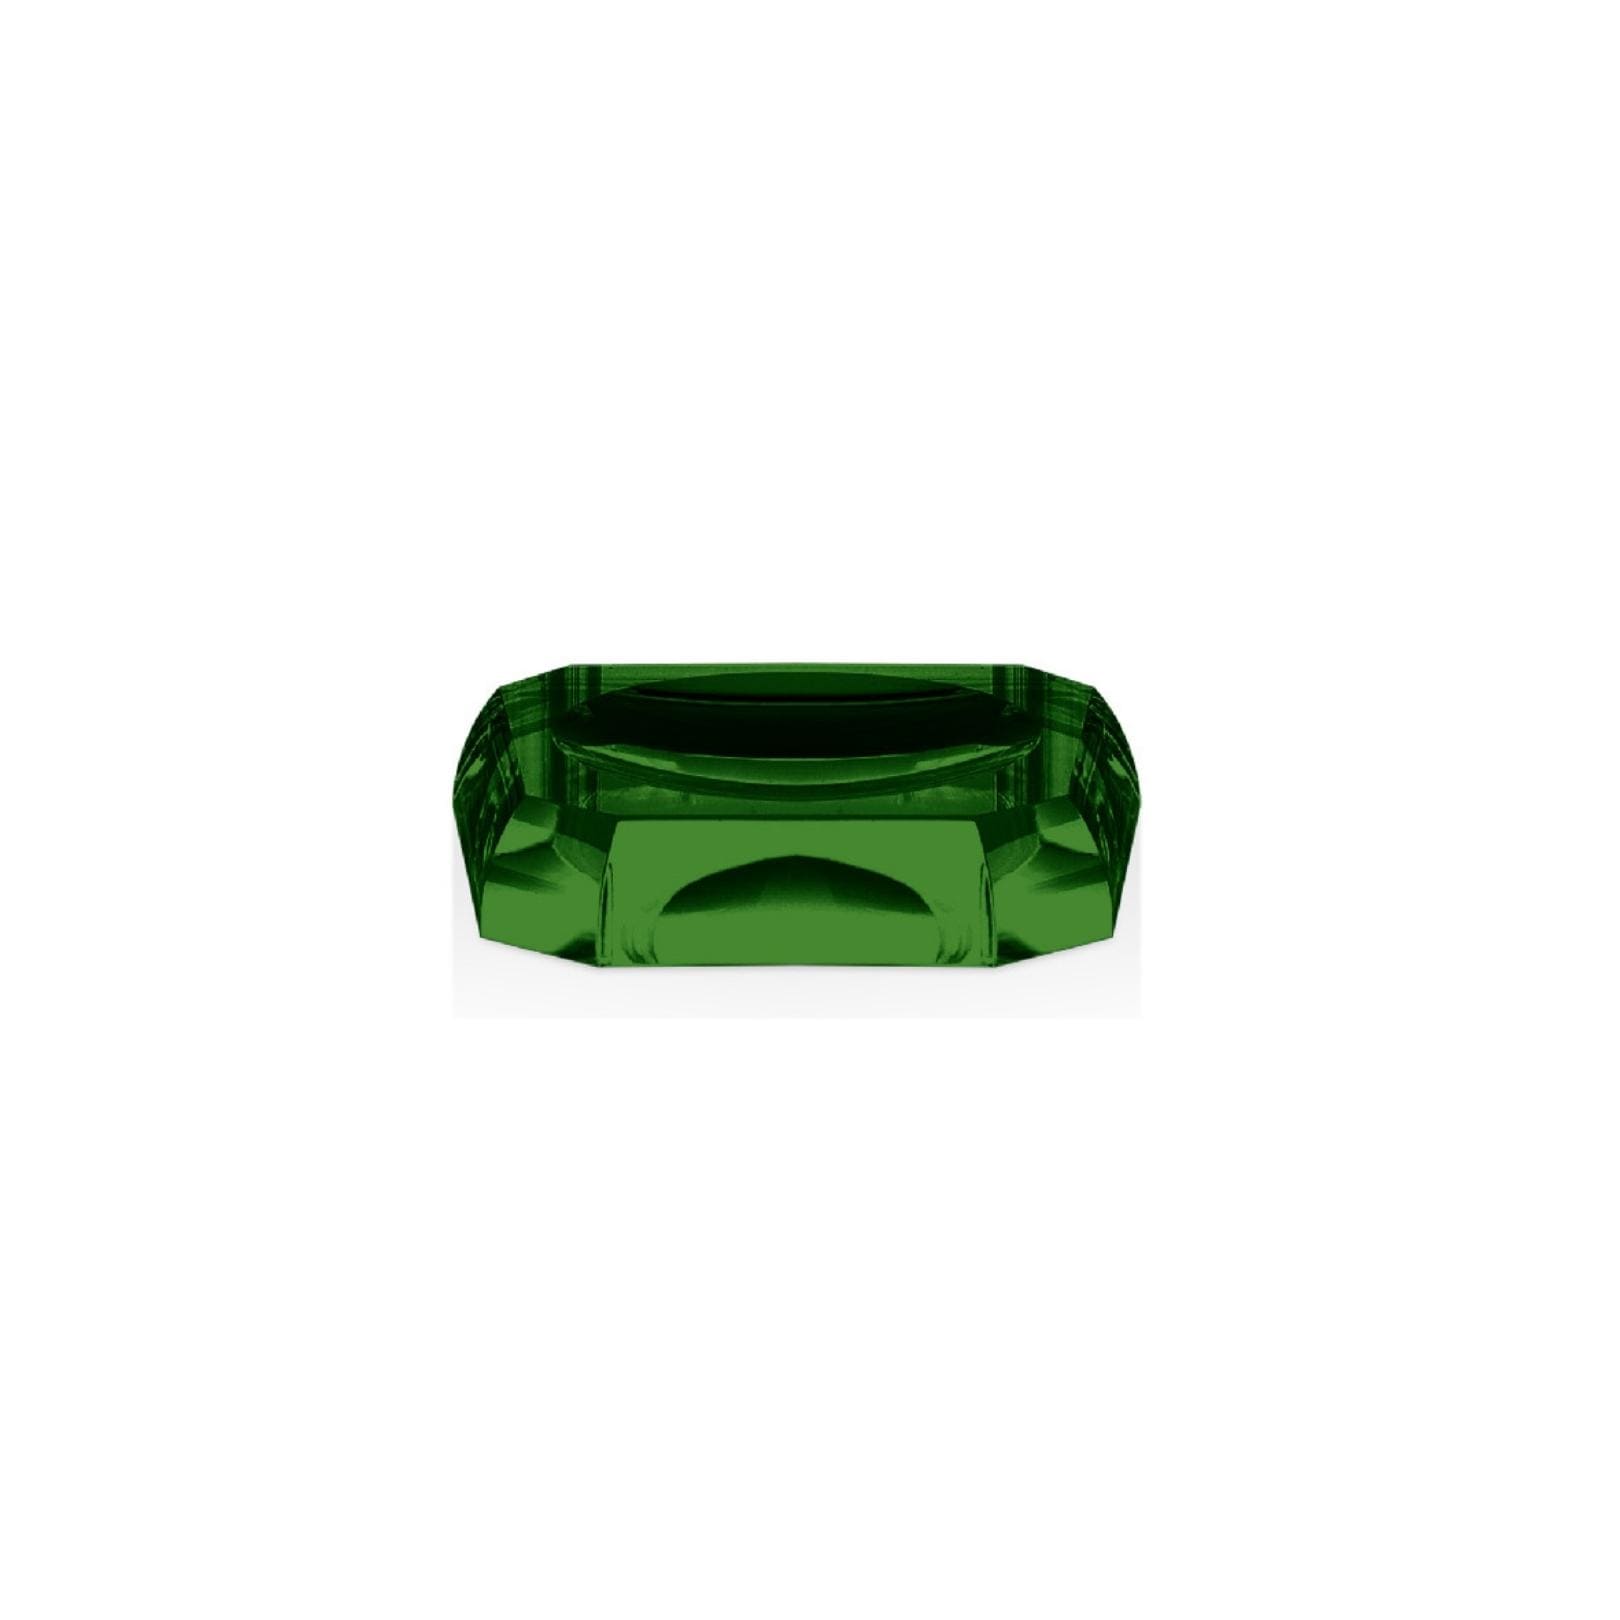 Soap dish english green Kristall Decor Walther